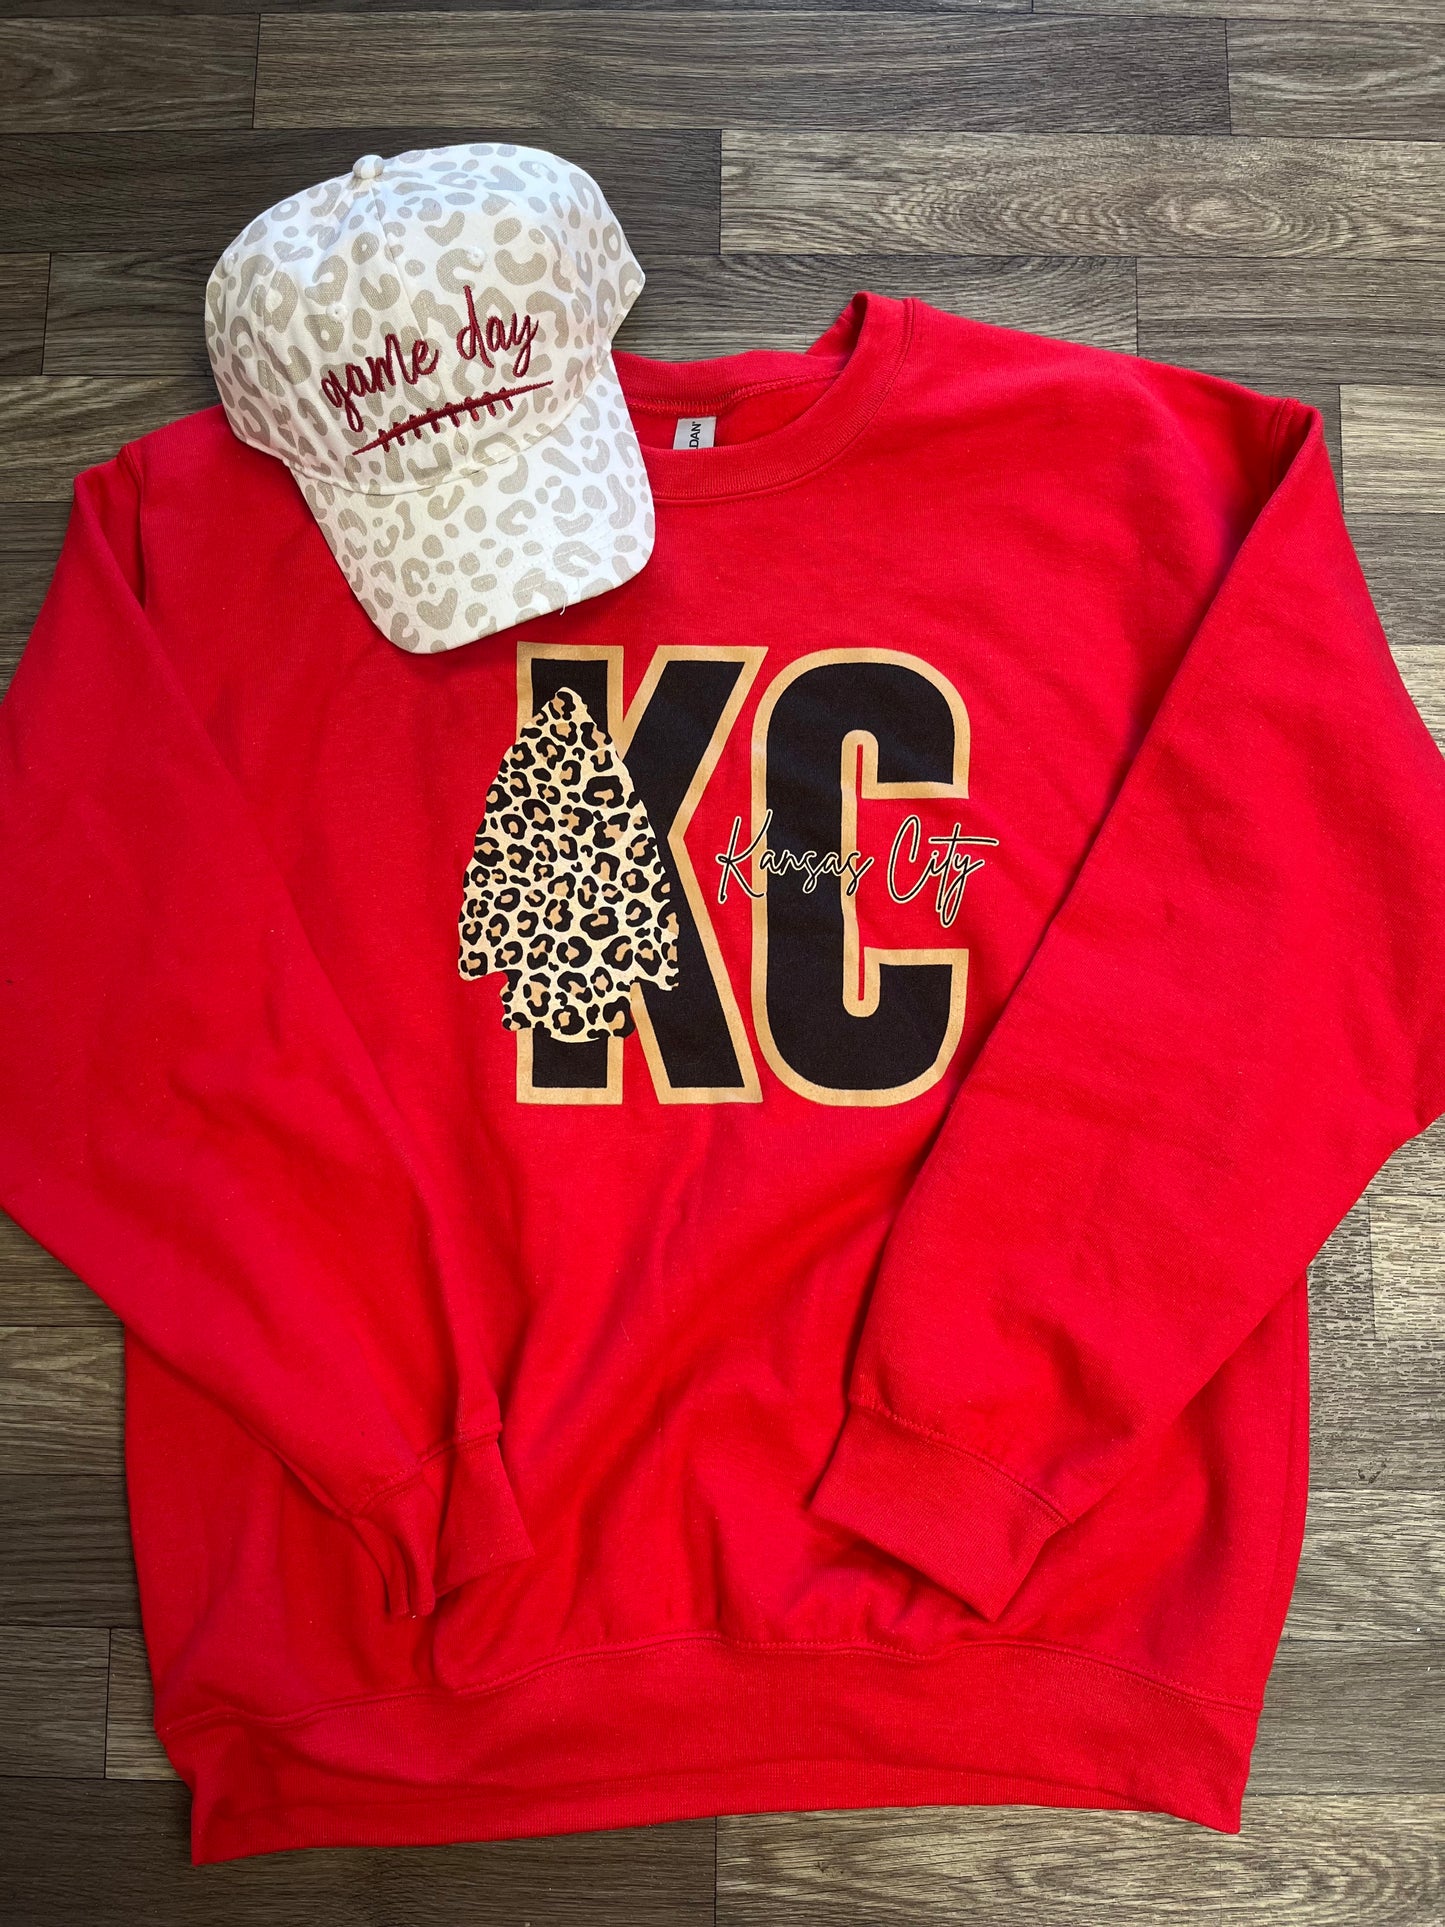 Cheetah kc sweater